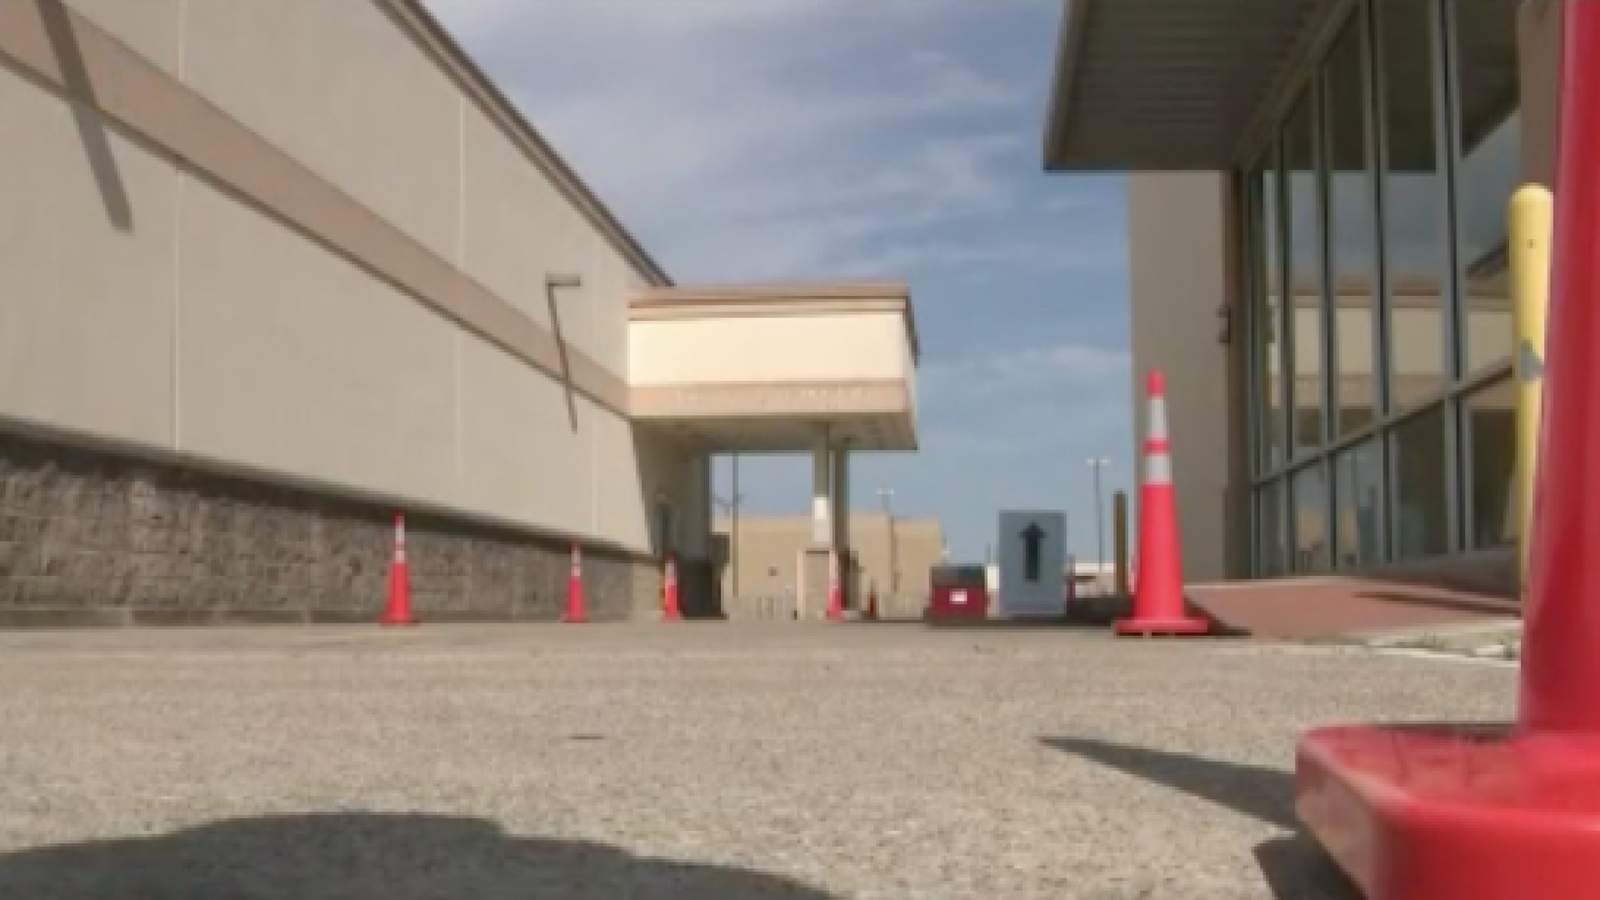 Walgreens opening 2 coronavirus testing sites in Harris County